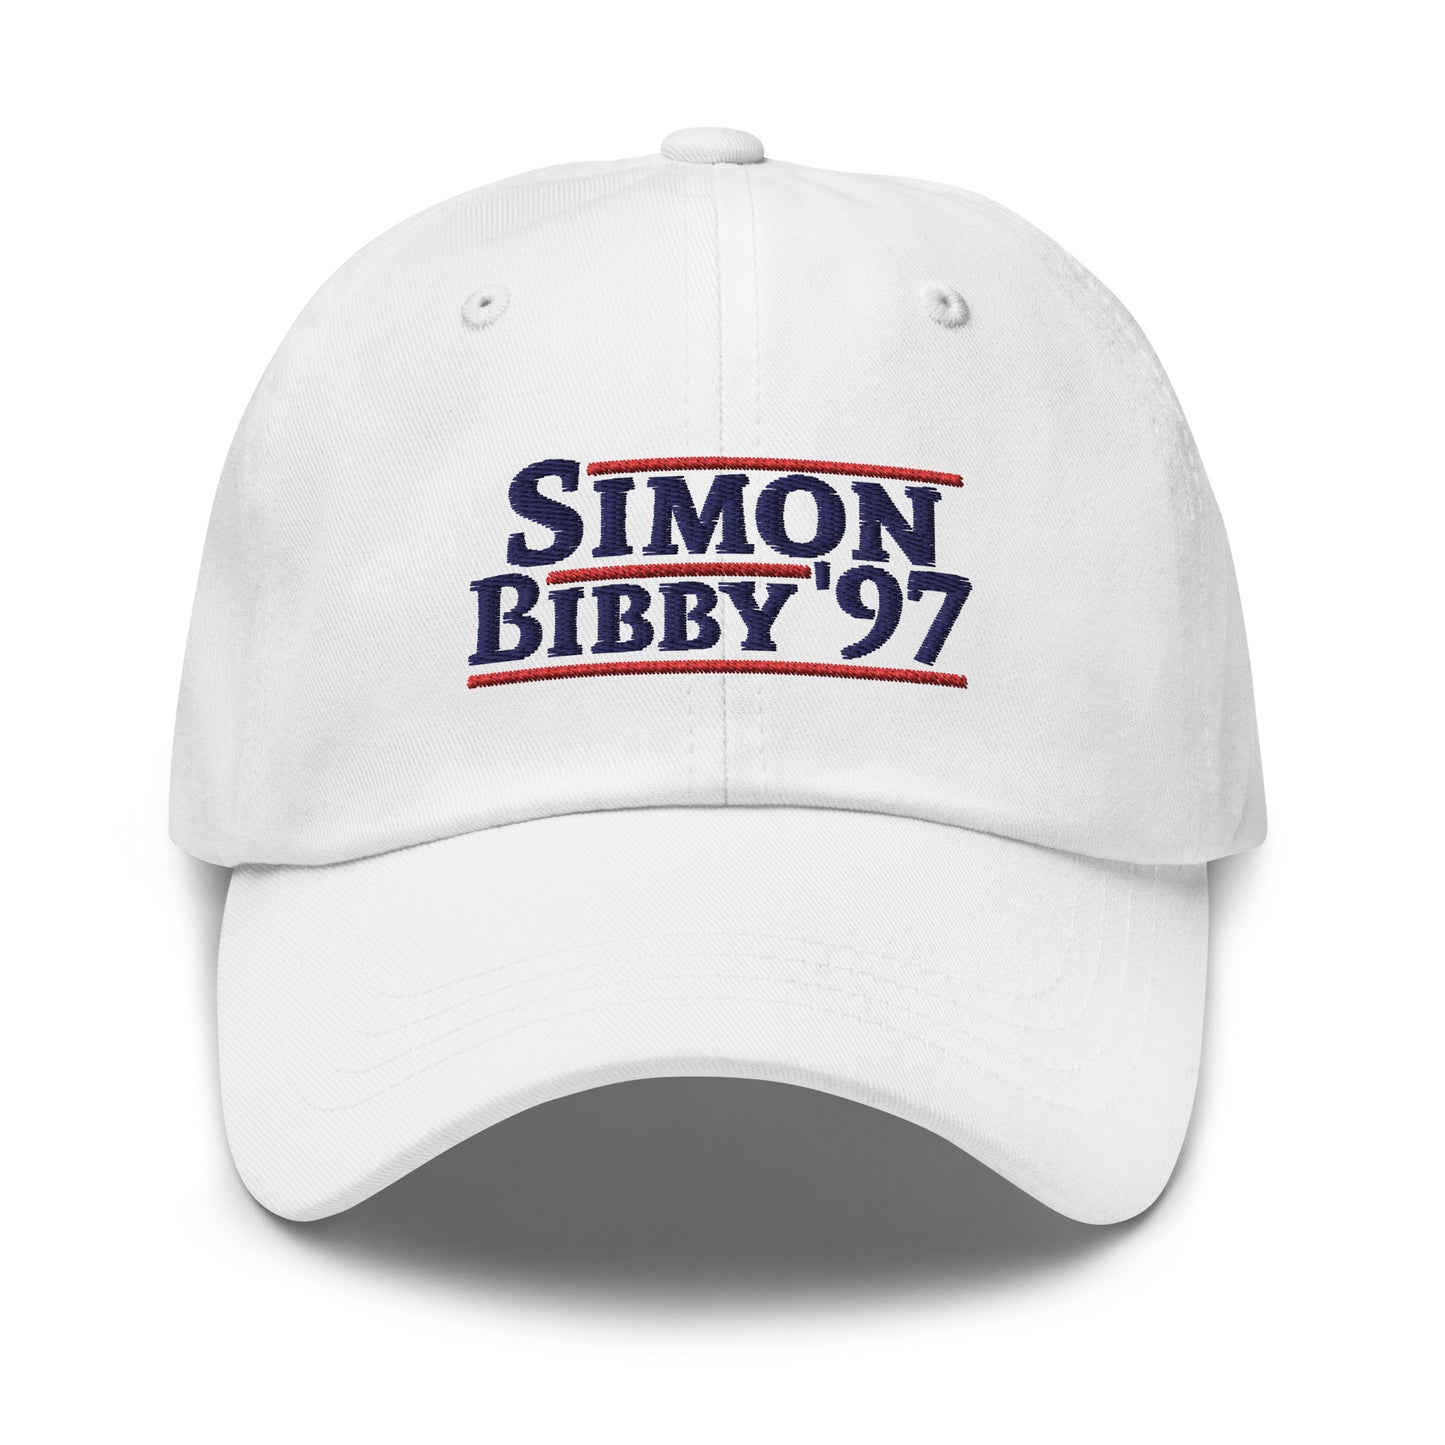 Simon/Bibby '97 - Dad Hat